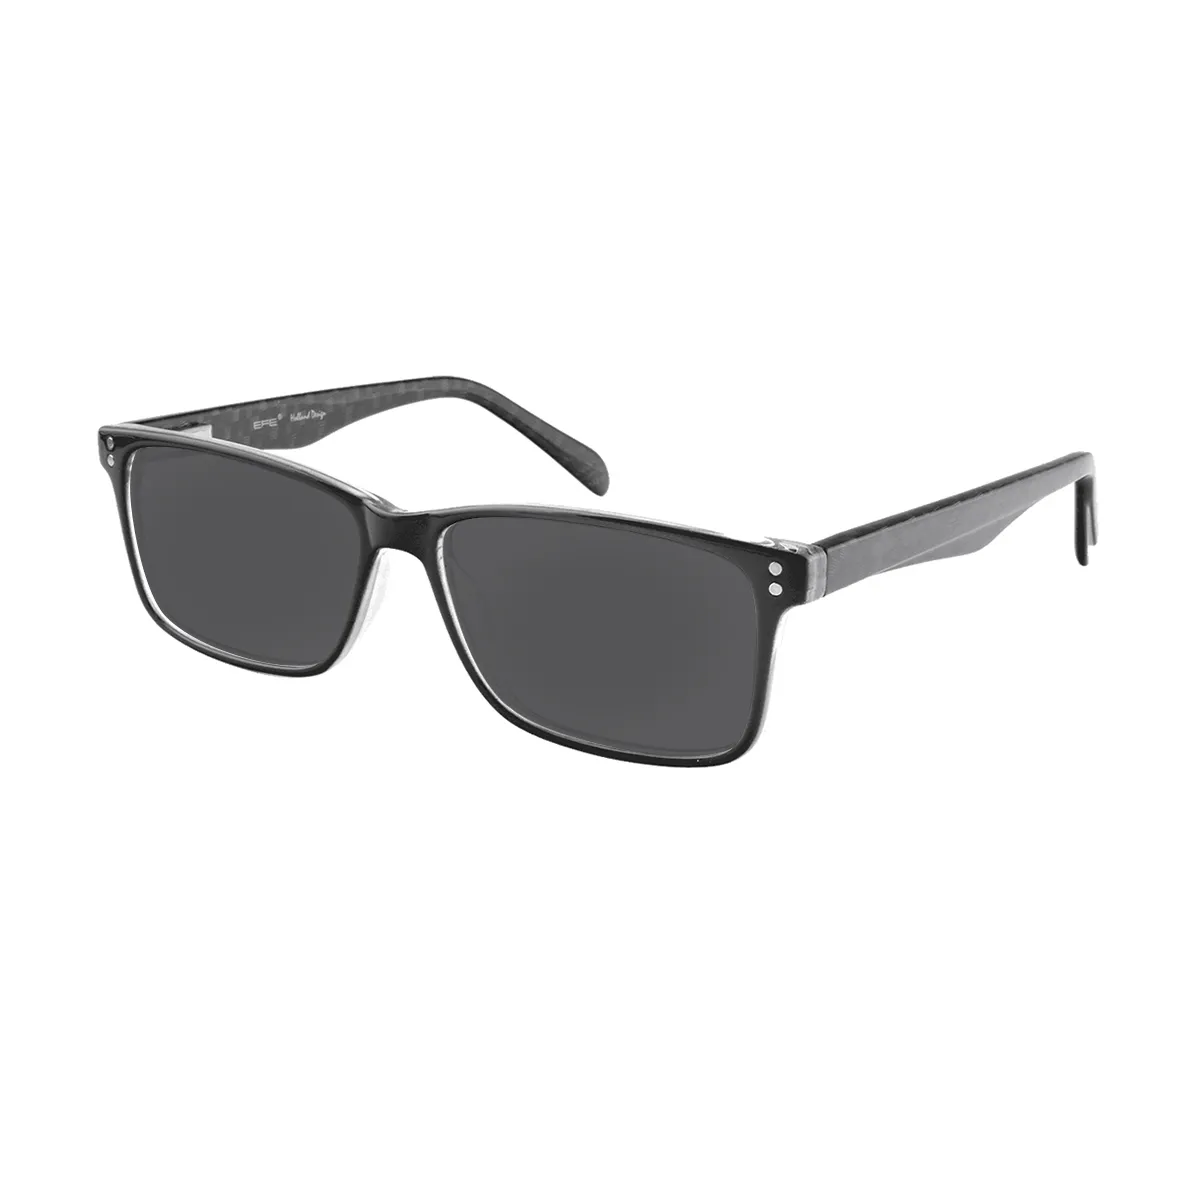 Pettit - Rectangle Gray Sunglasses for Men & Women